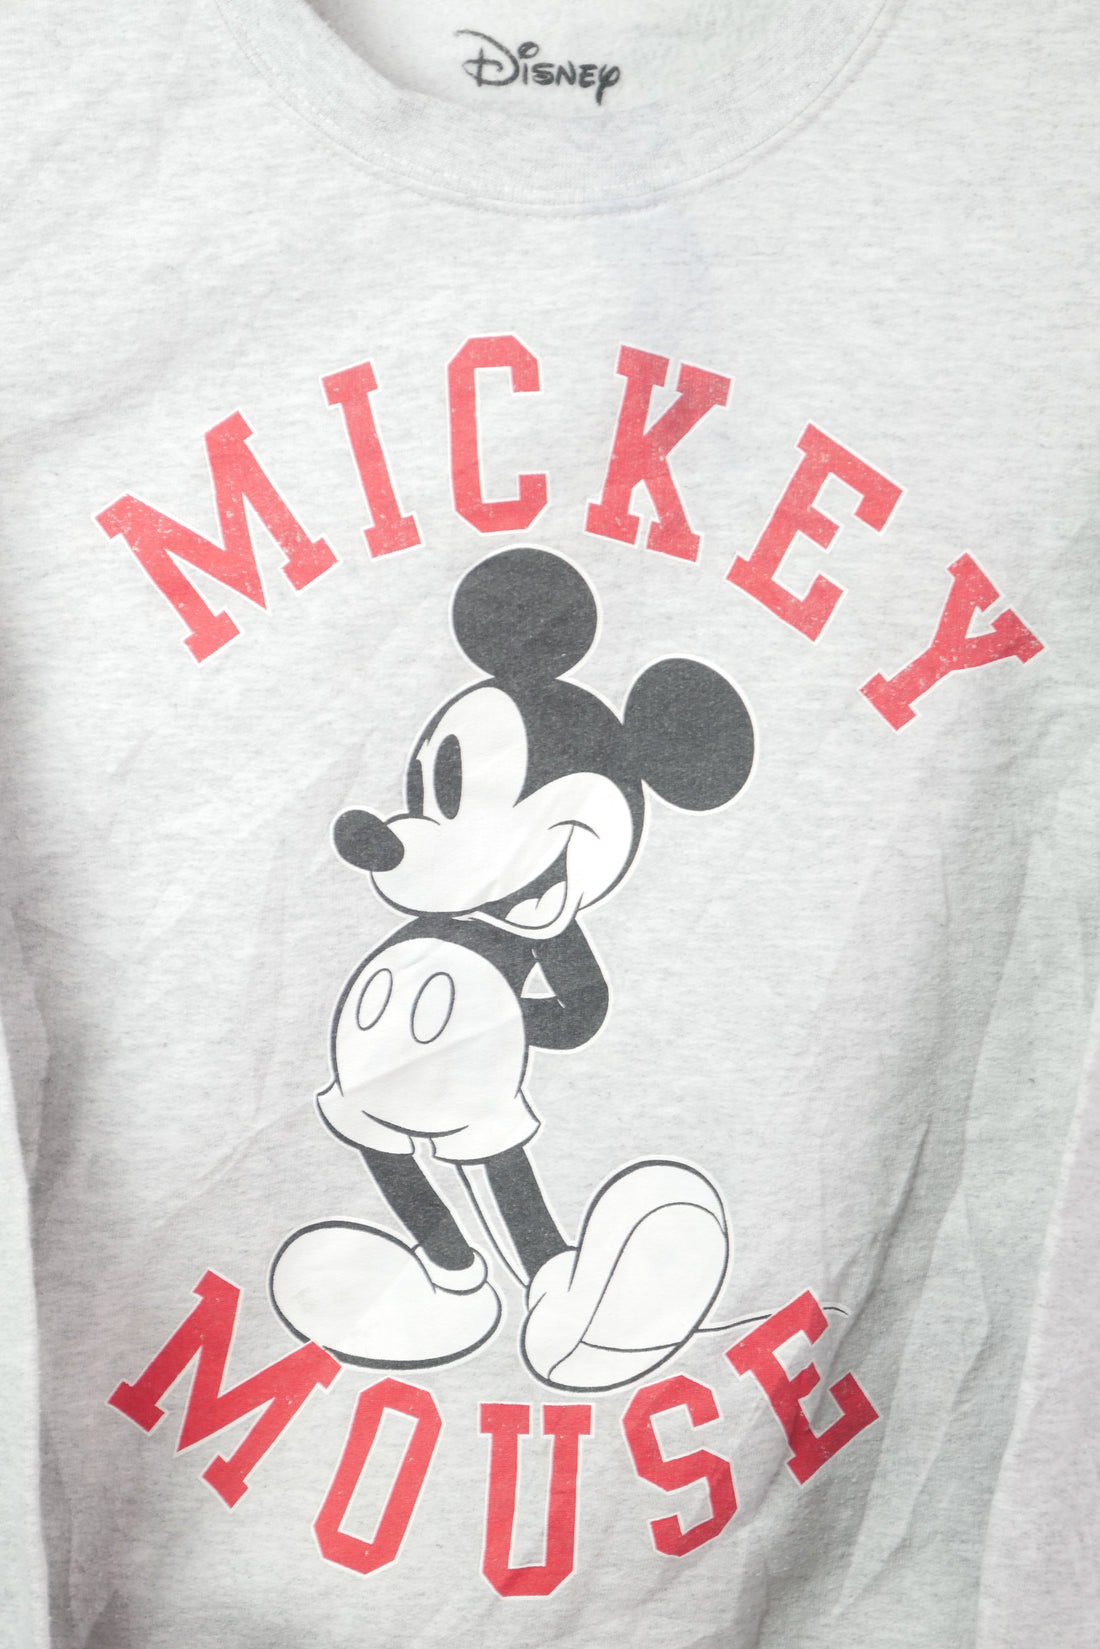 The Disney Mickey Mouse Graphic Sweatshirt (S)